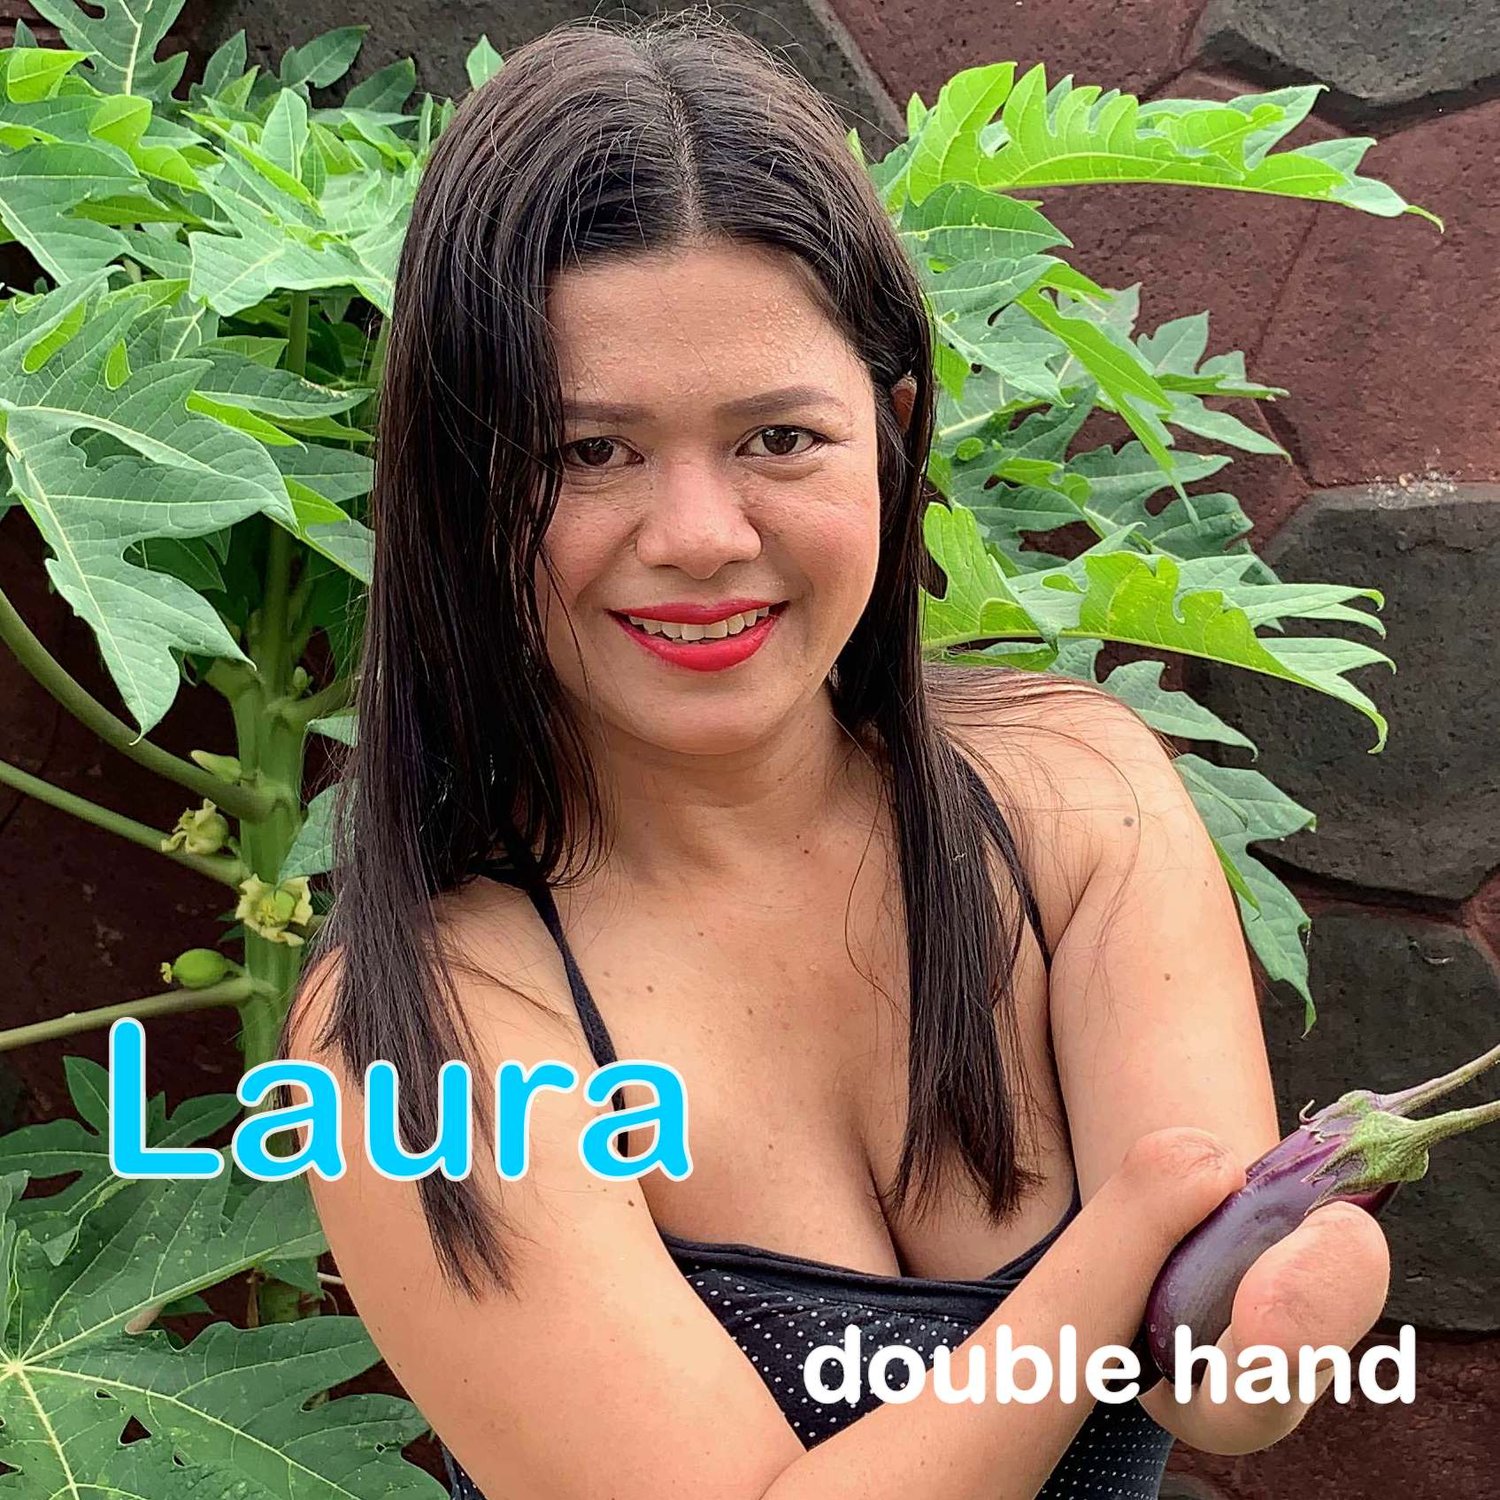 Luara double hand amputee